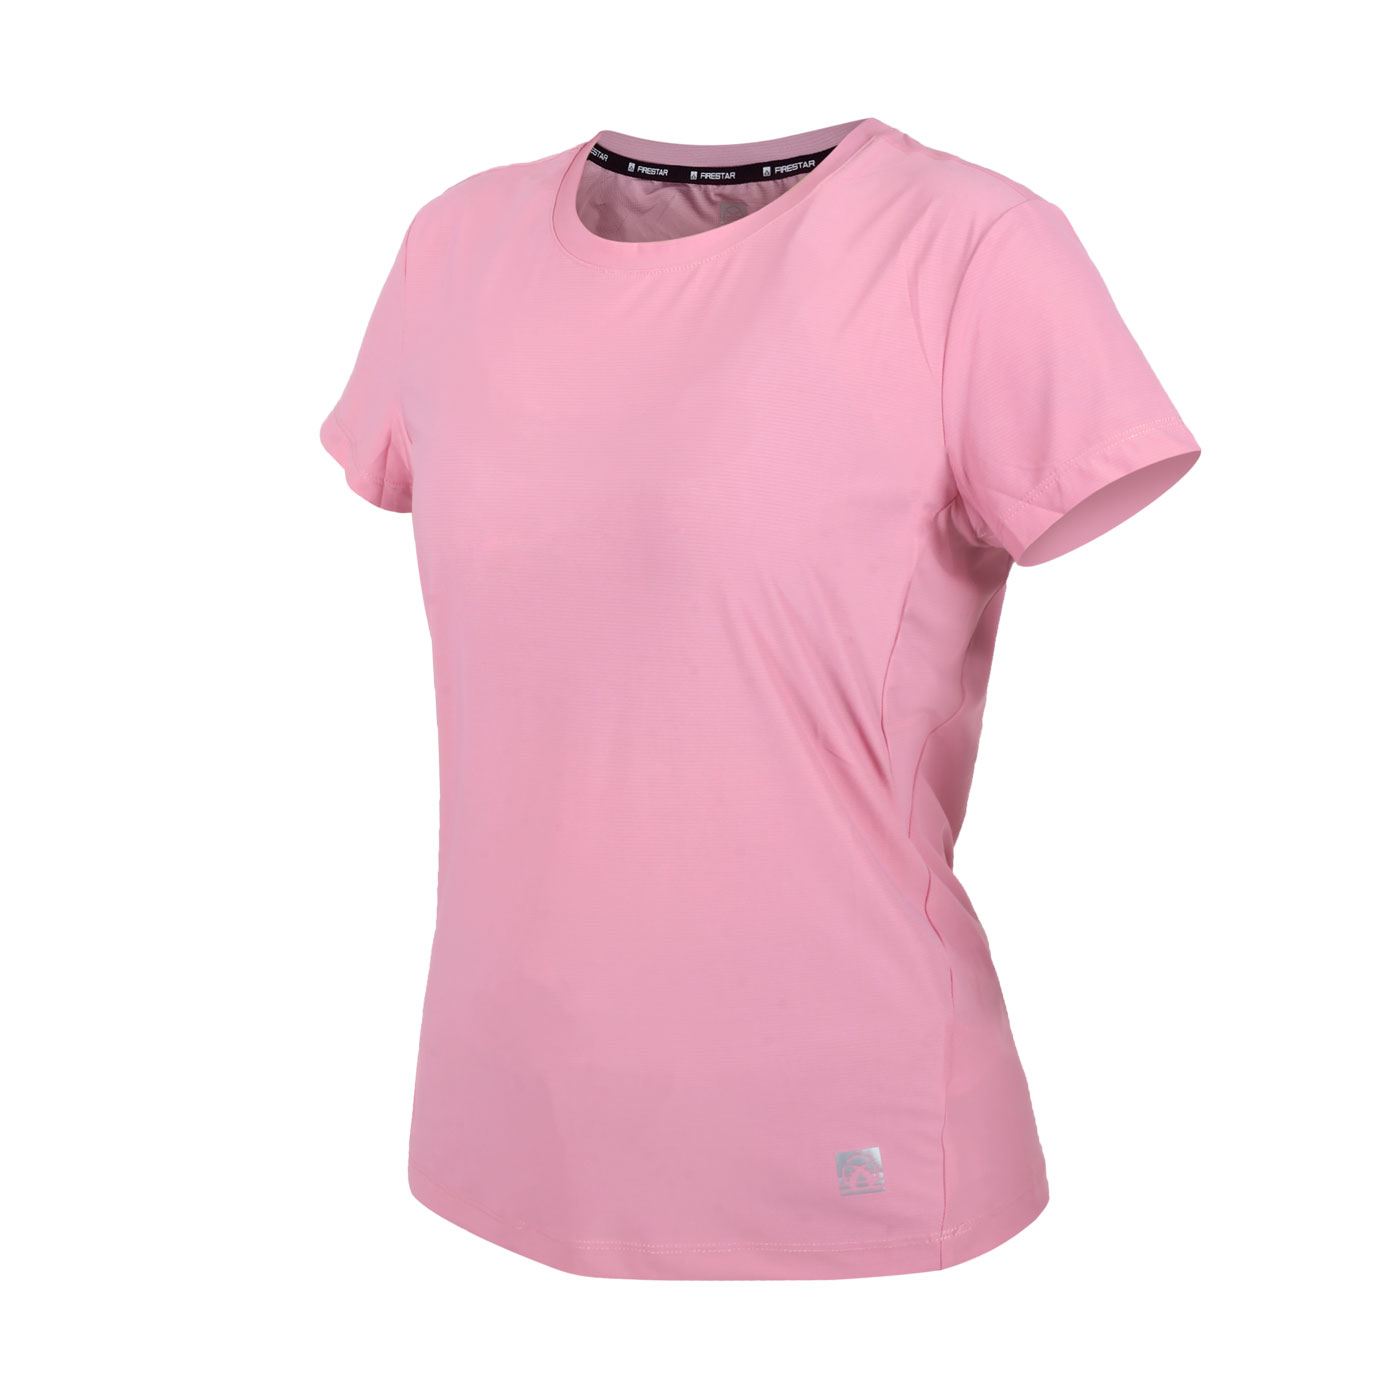 FIRESTAR 女款彈性圓領短袖T恤 DL261-43 - 粉紅